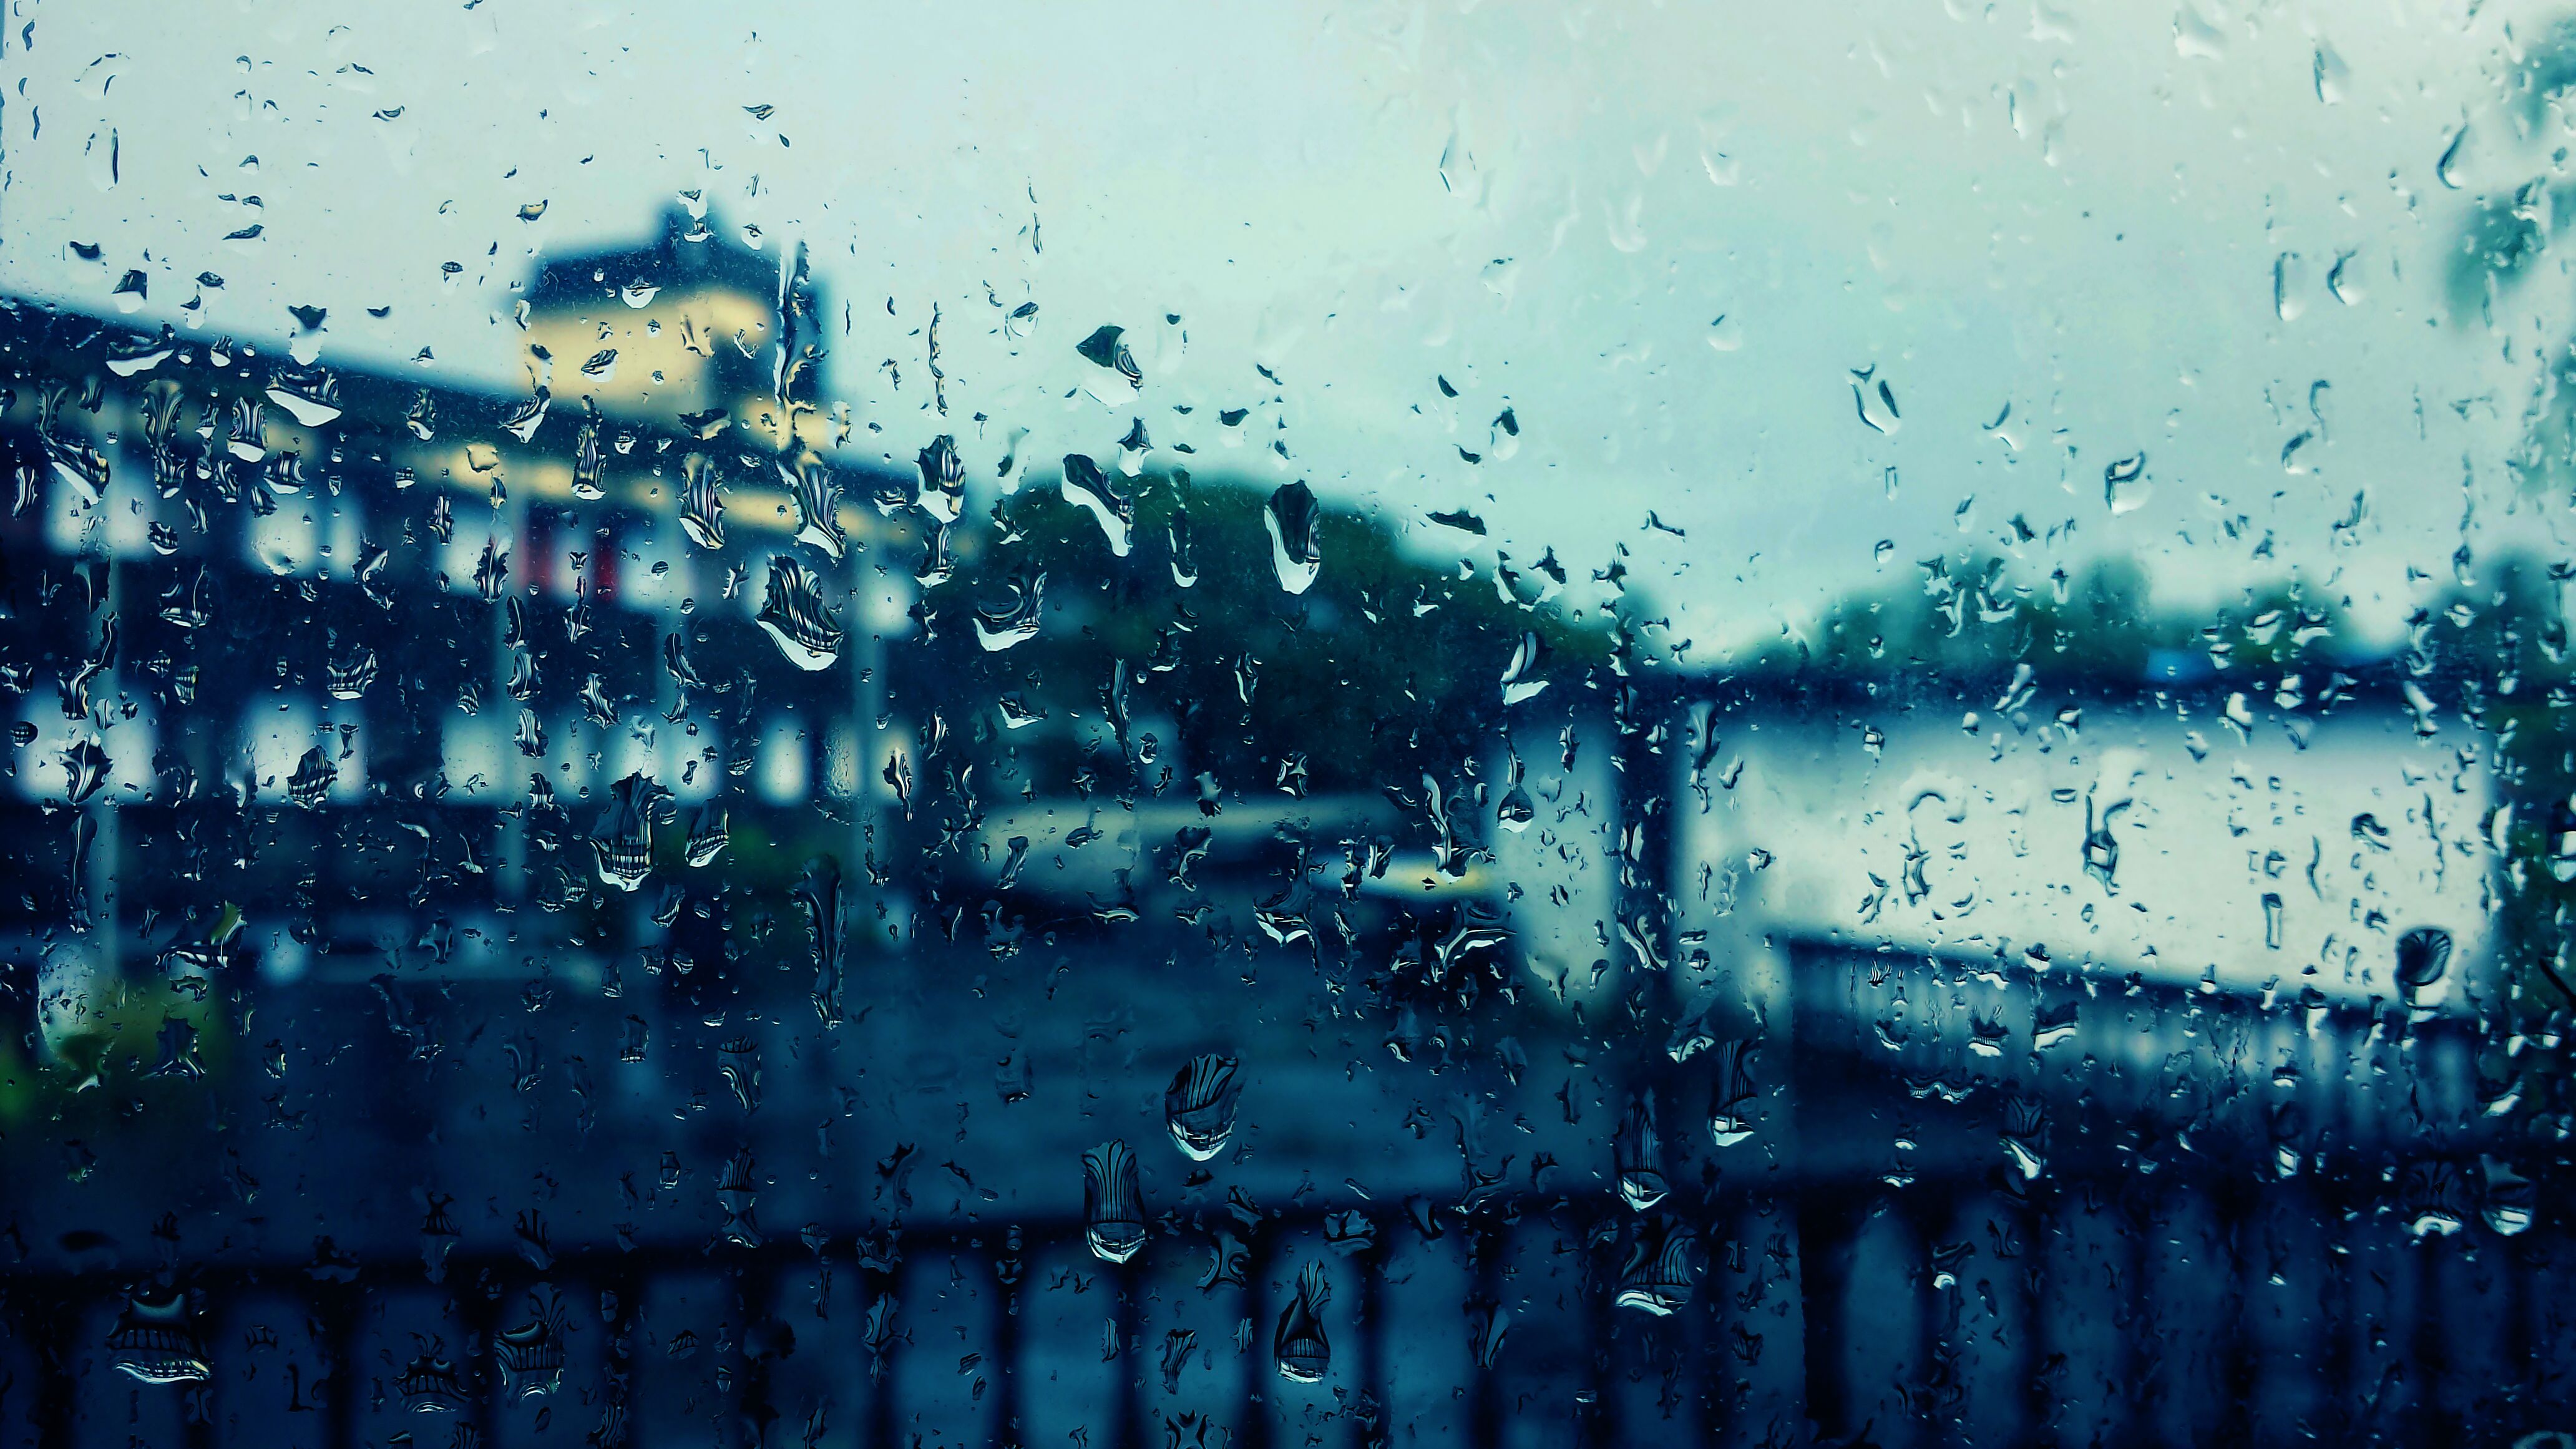 raindrops-on-window.jpg